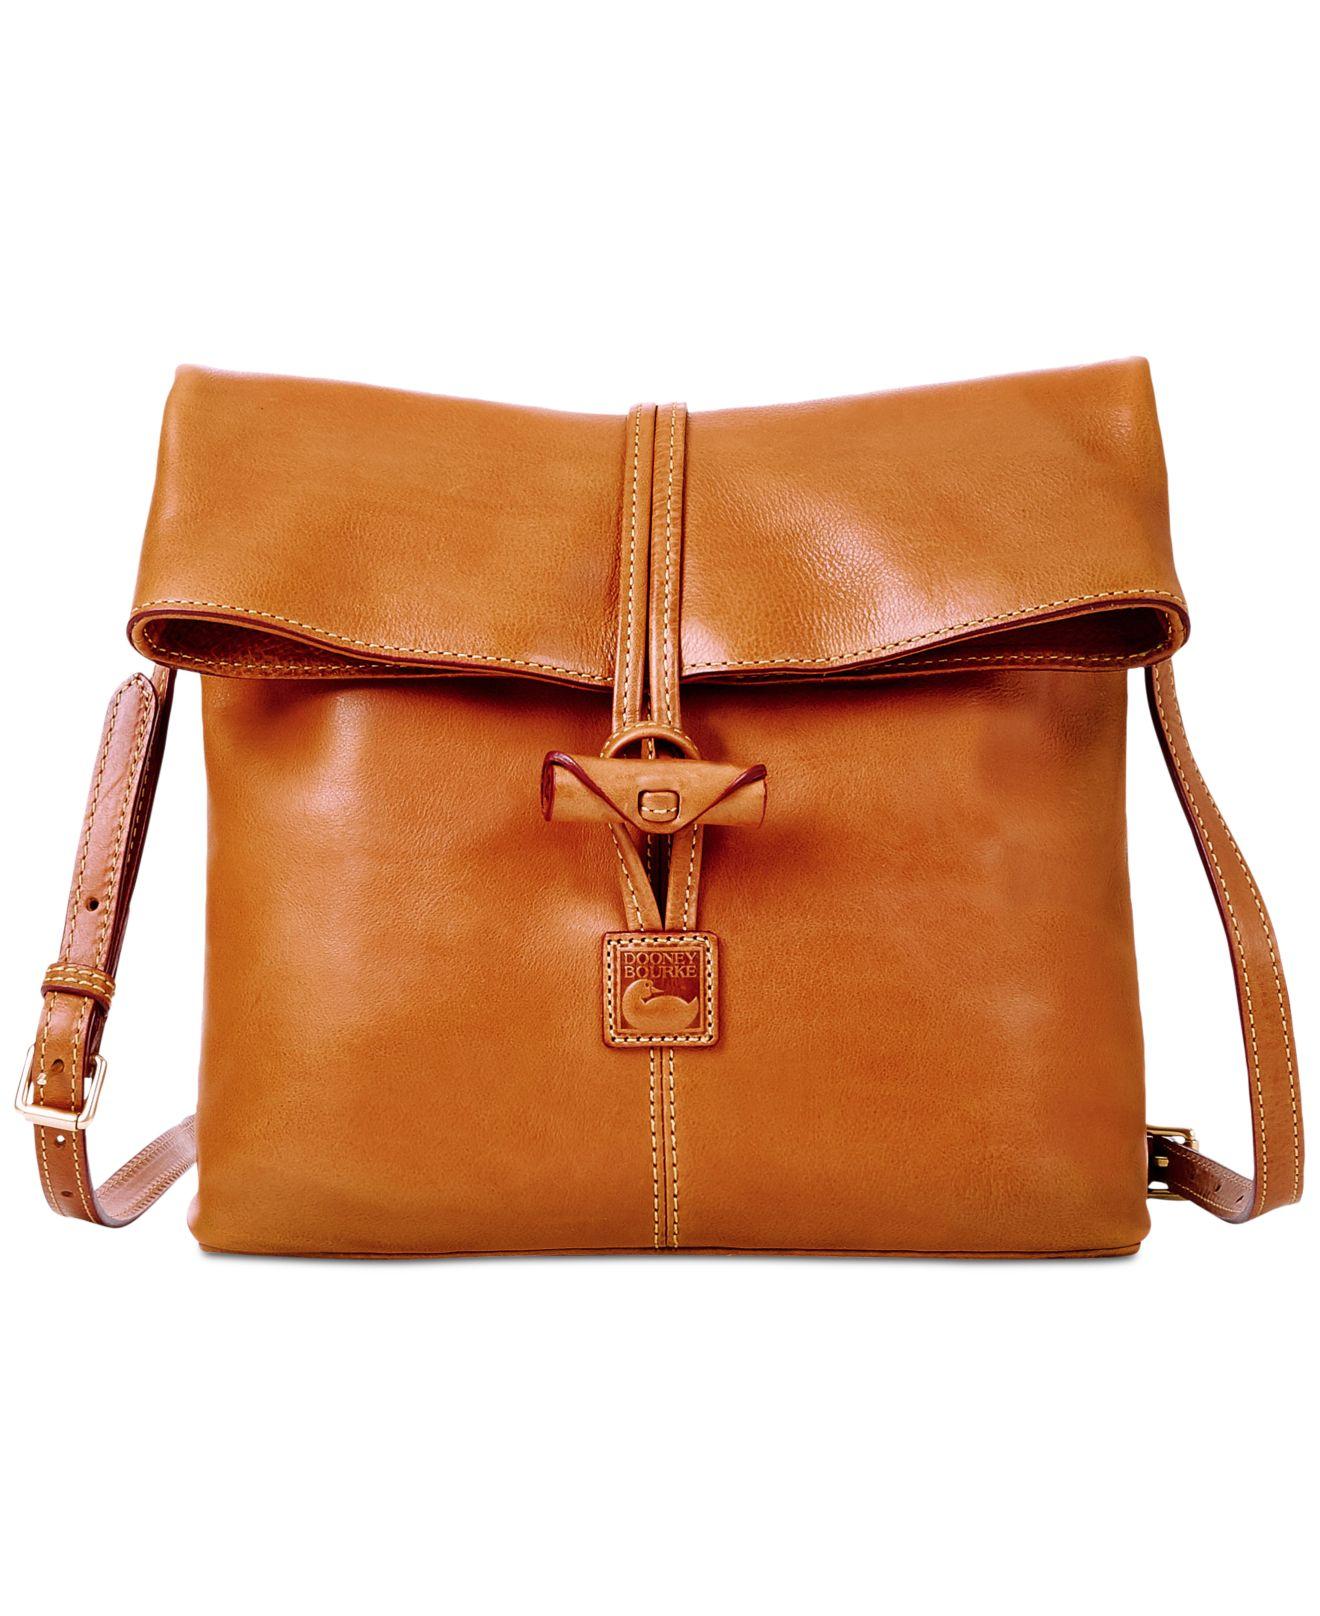 Dooney & Bourke Handbag, Florentine Medium Toggle Crossbody Bag in Brown